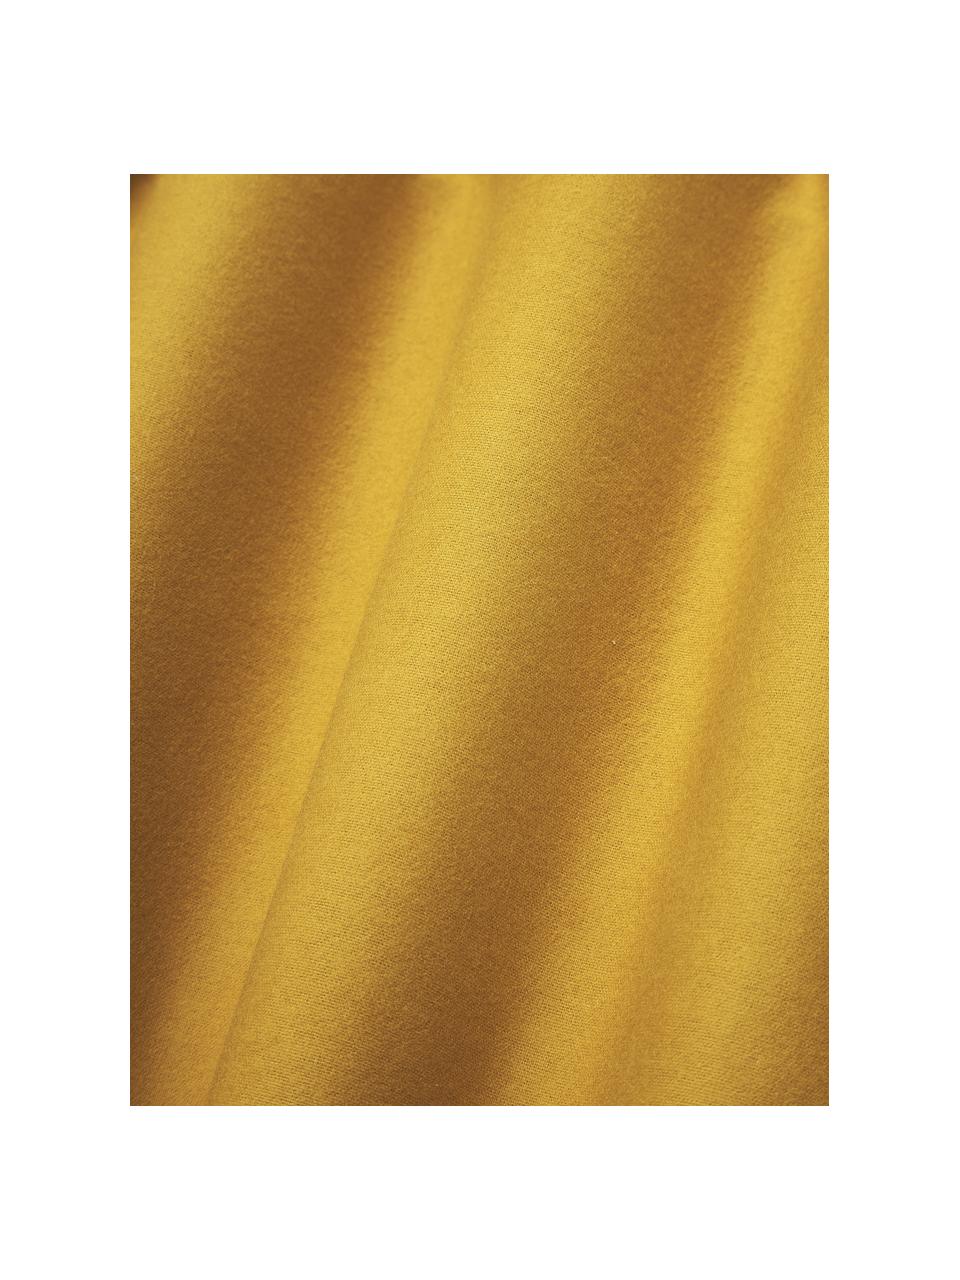 Sábana bajera cubrecolchón de franela Biba, Amarillo mostaza, Cama 200 cm (200 x 200 x 15 cm)